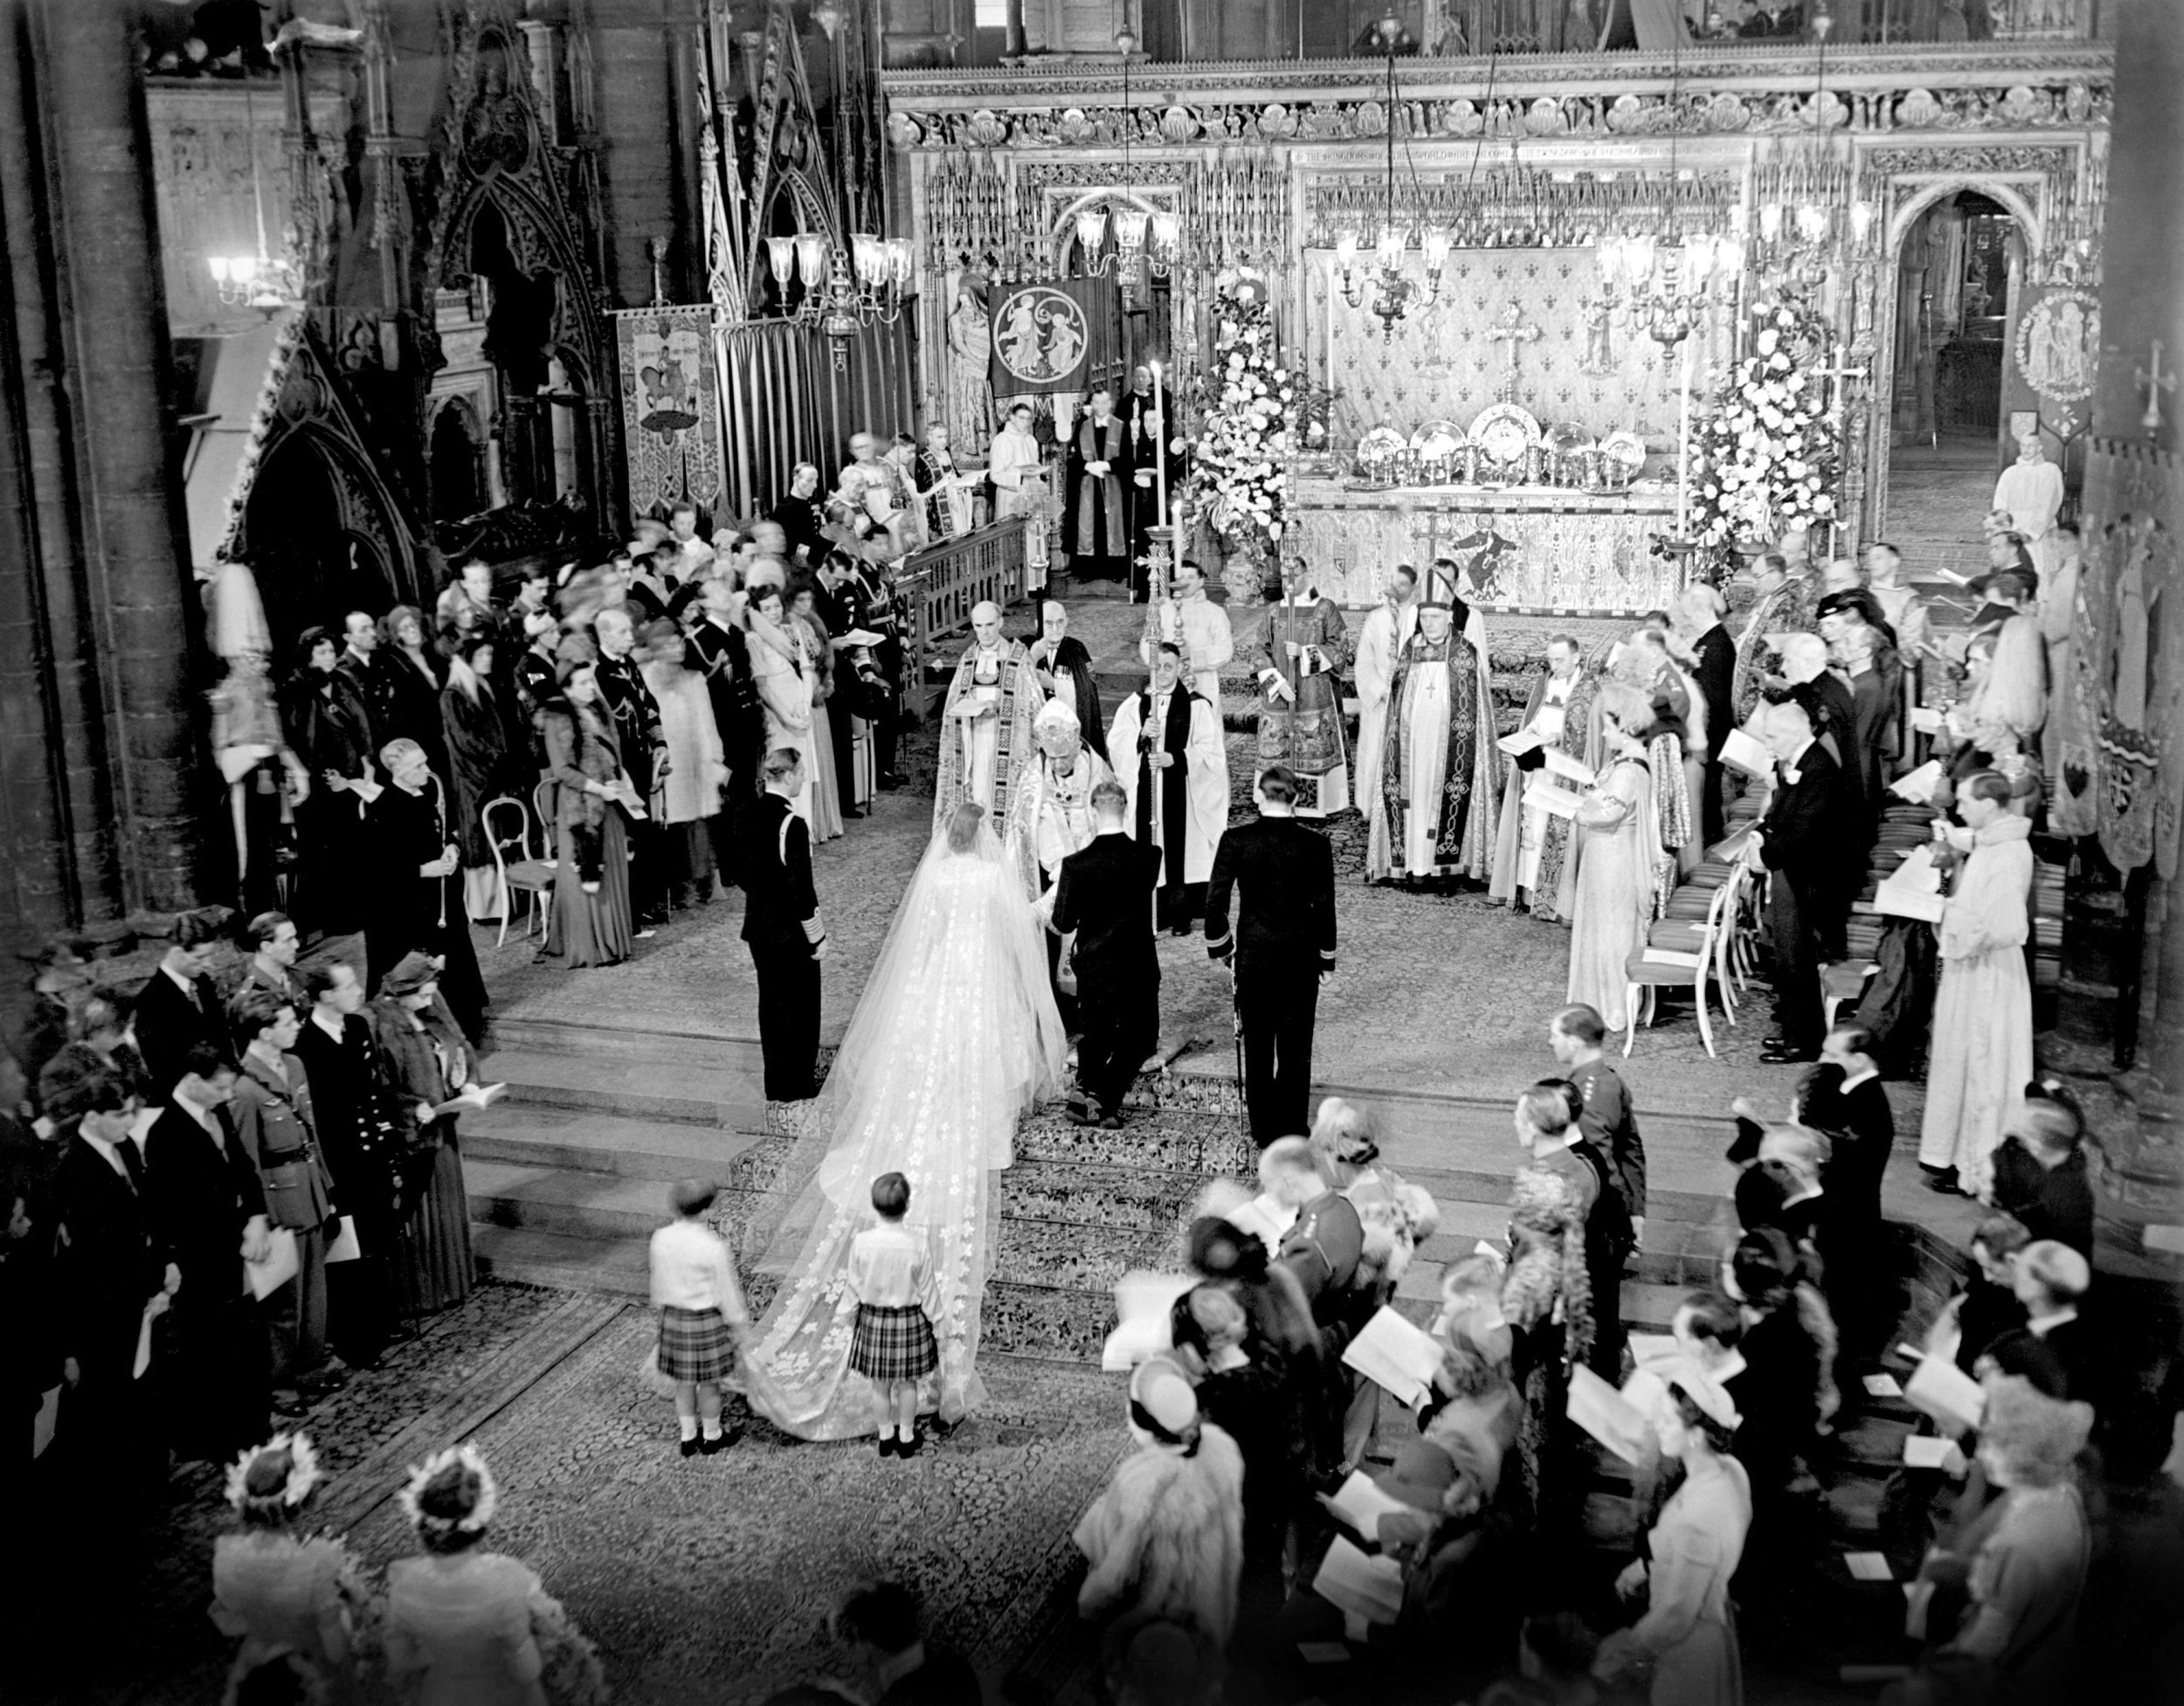 Princess Elizabeth and the Duke of Edinburgh in Westminster Abbey on their wedding day, 1947